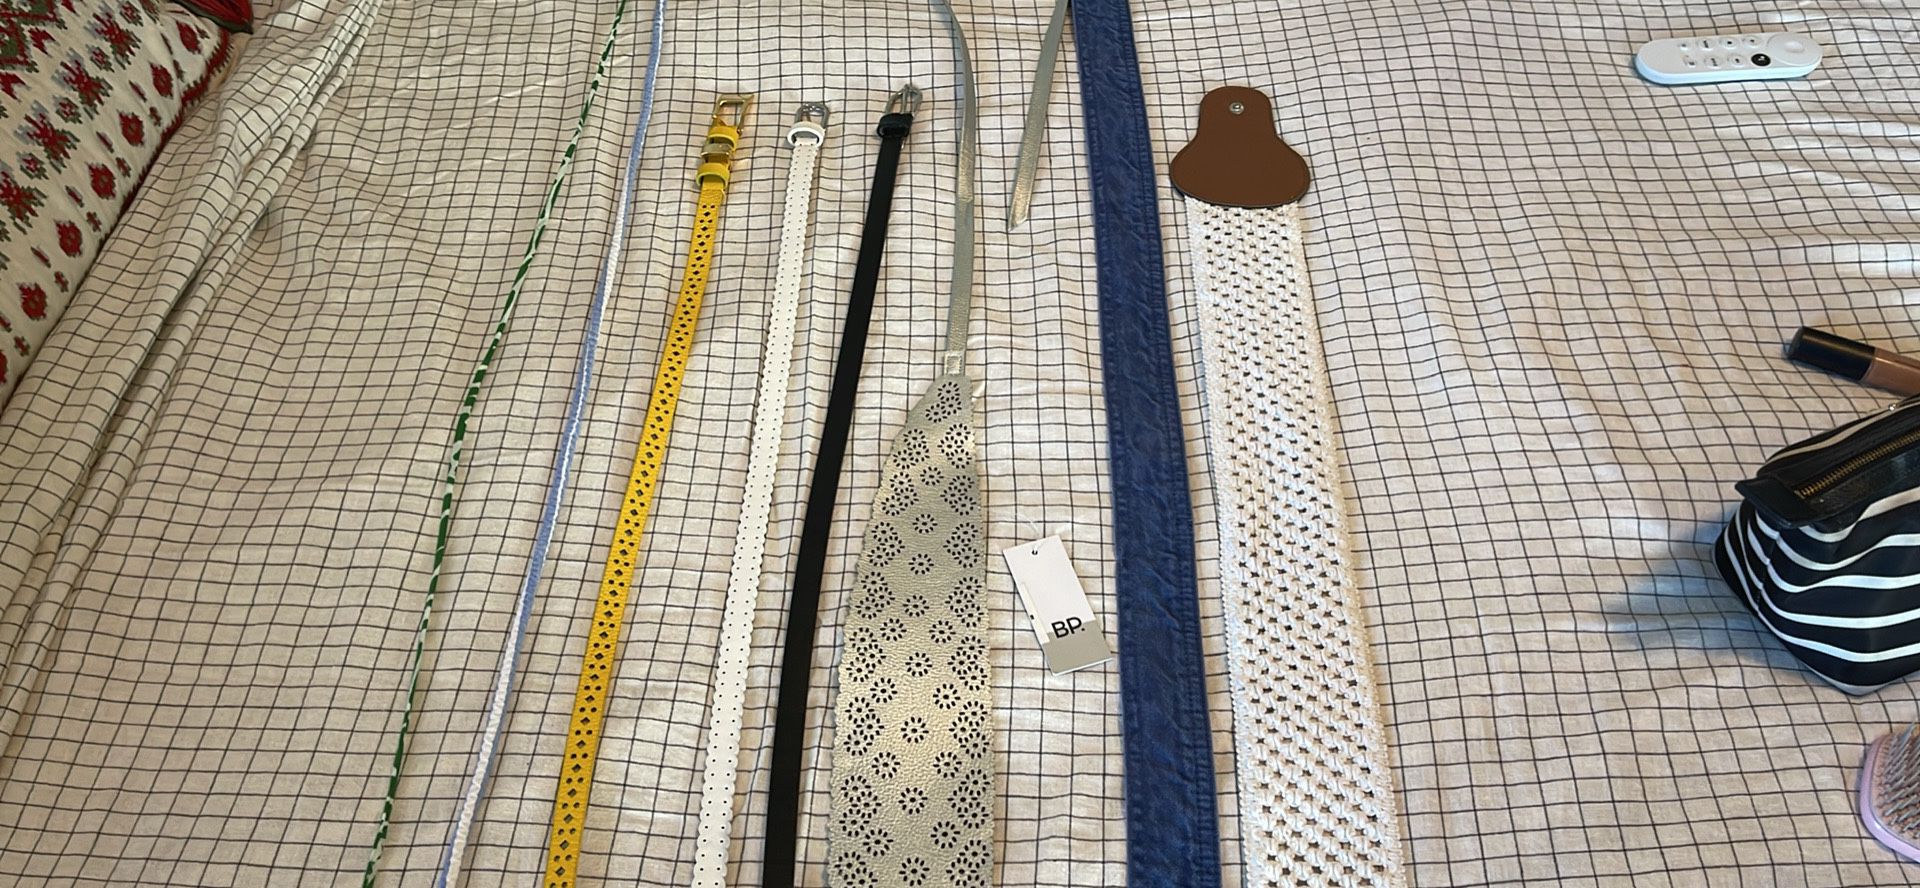 Assorted Belts